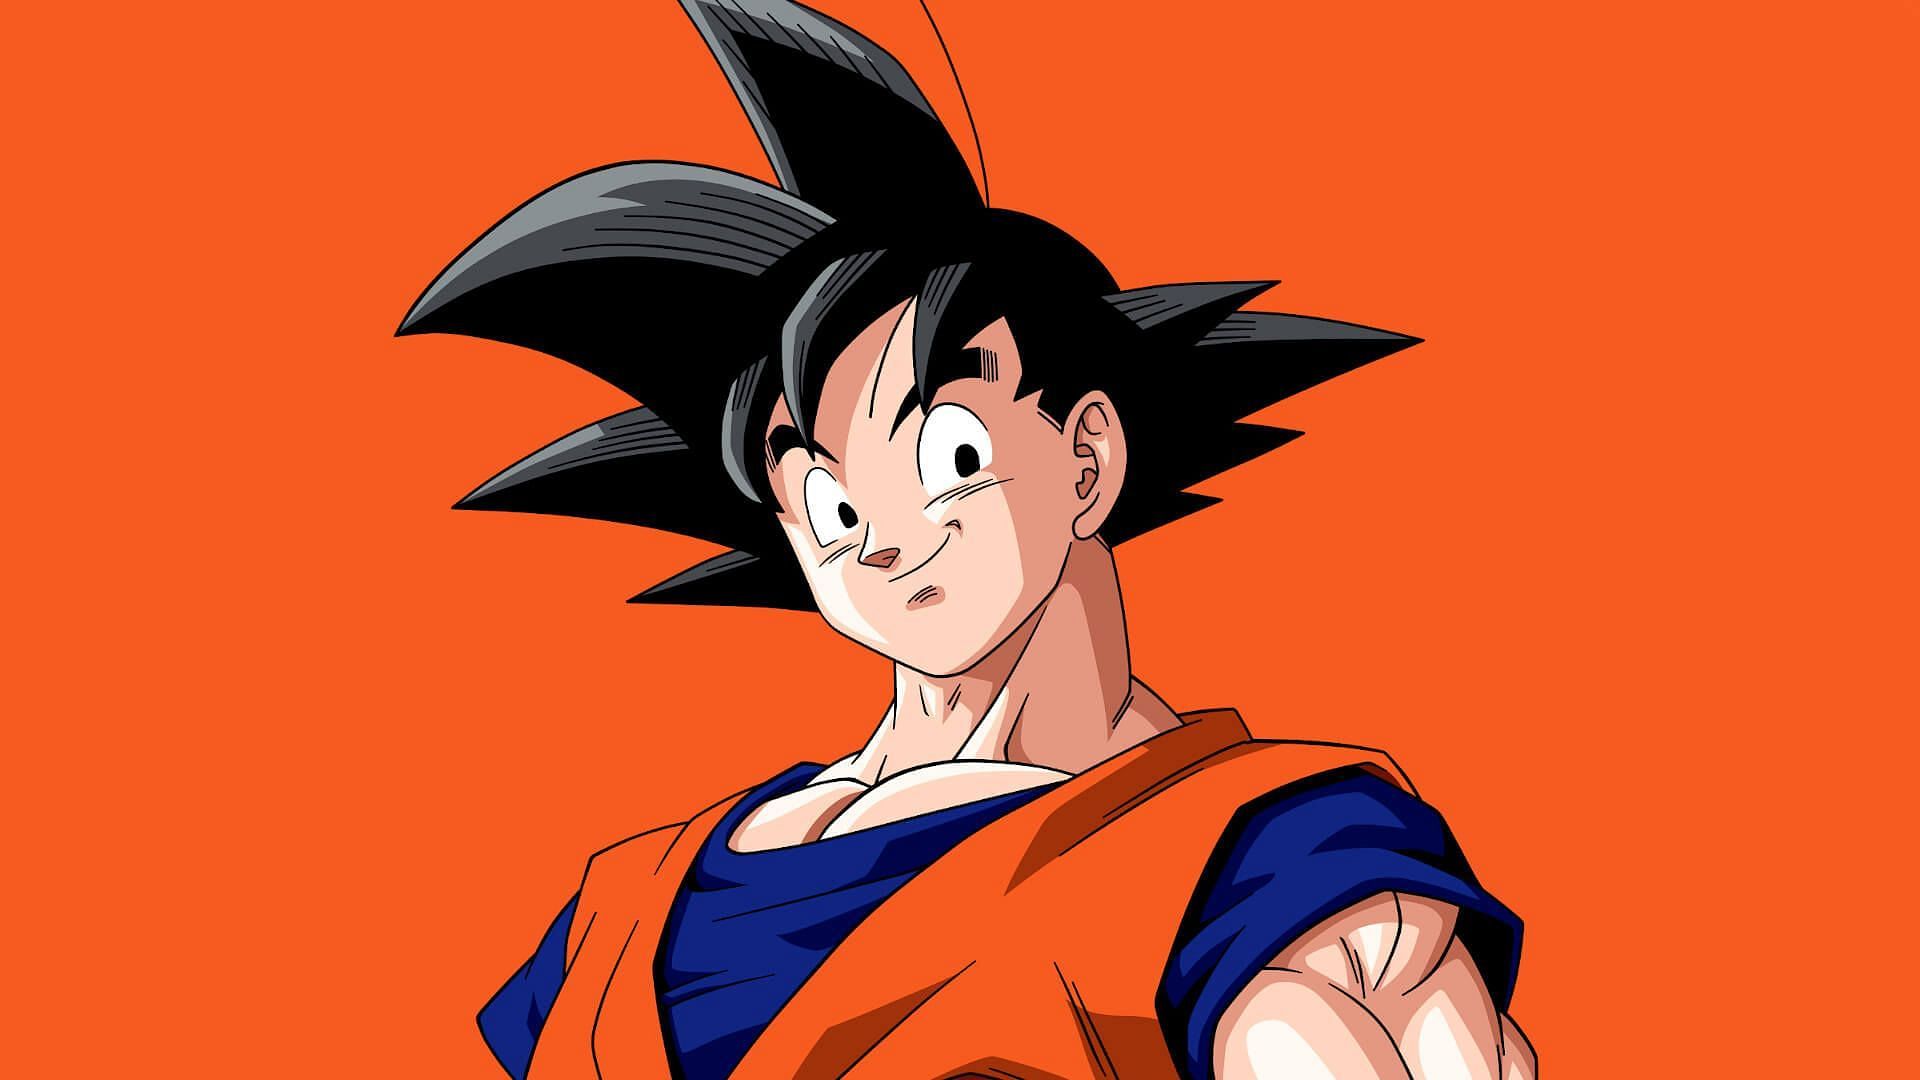 Goku (Image via Toei Animation)